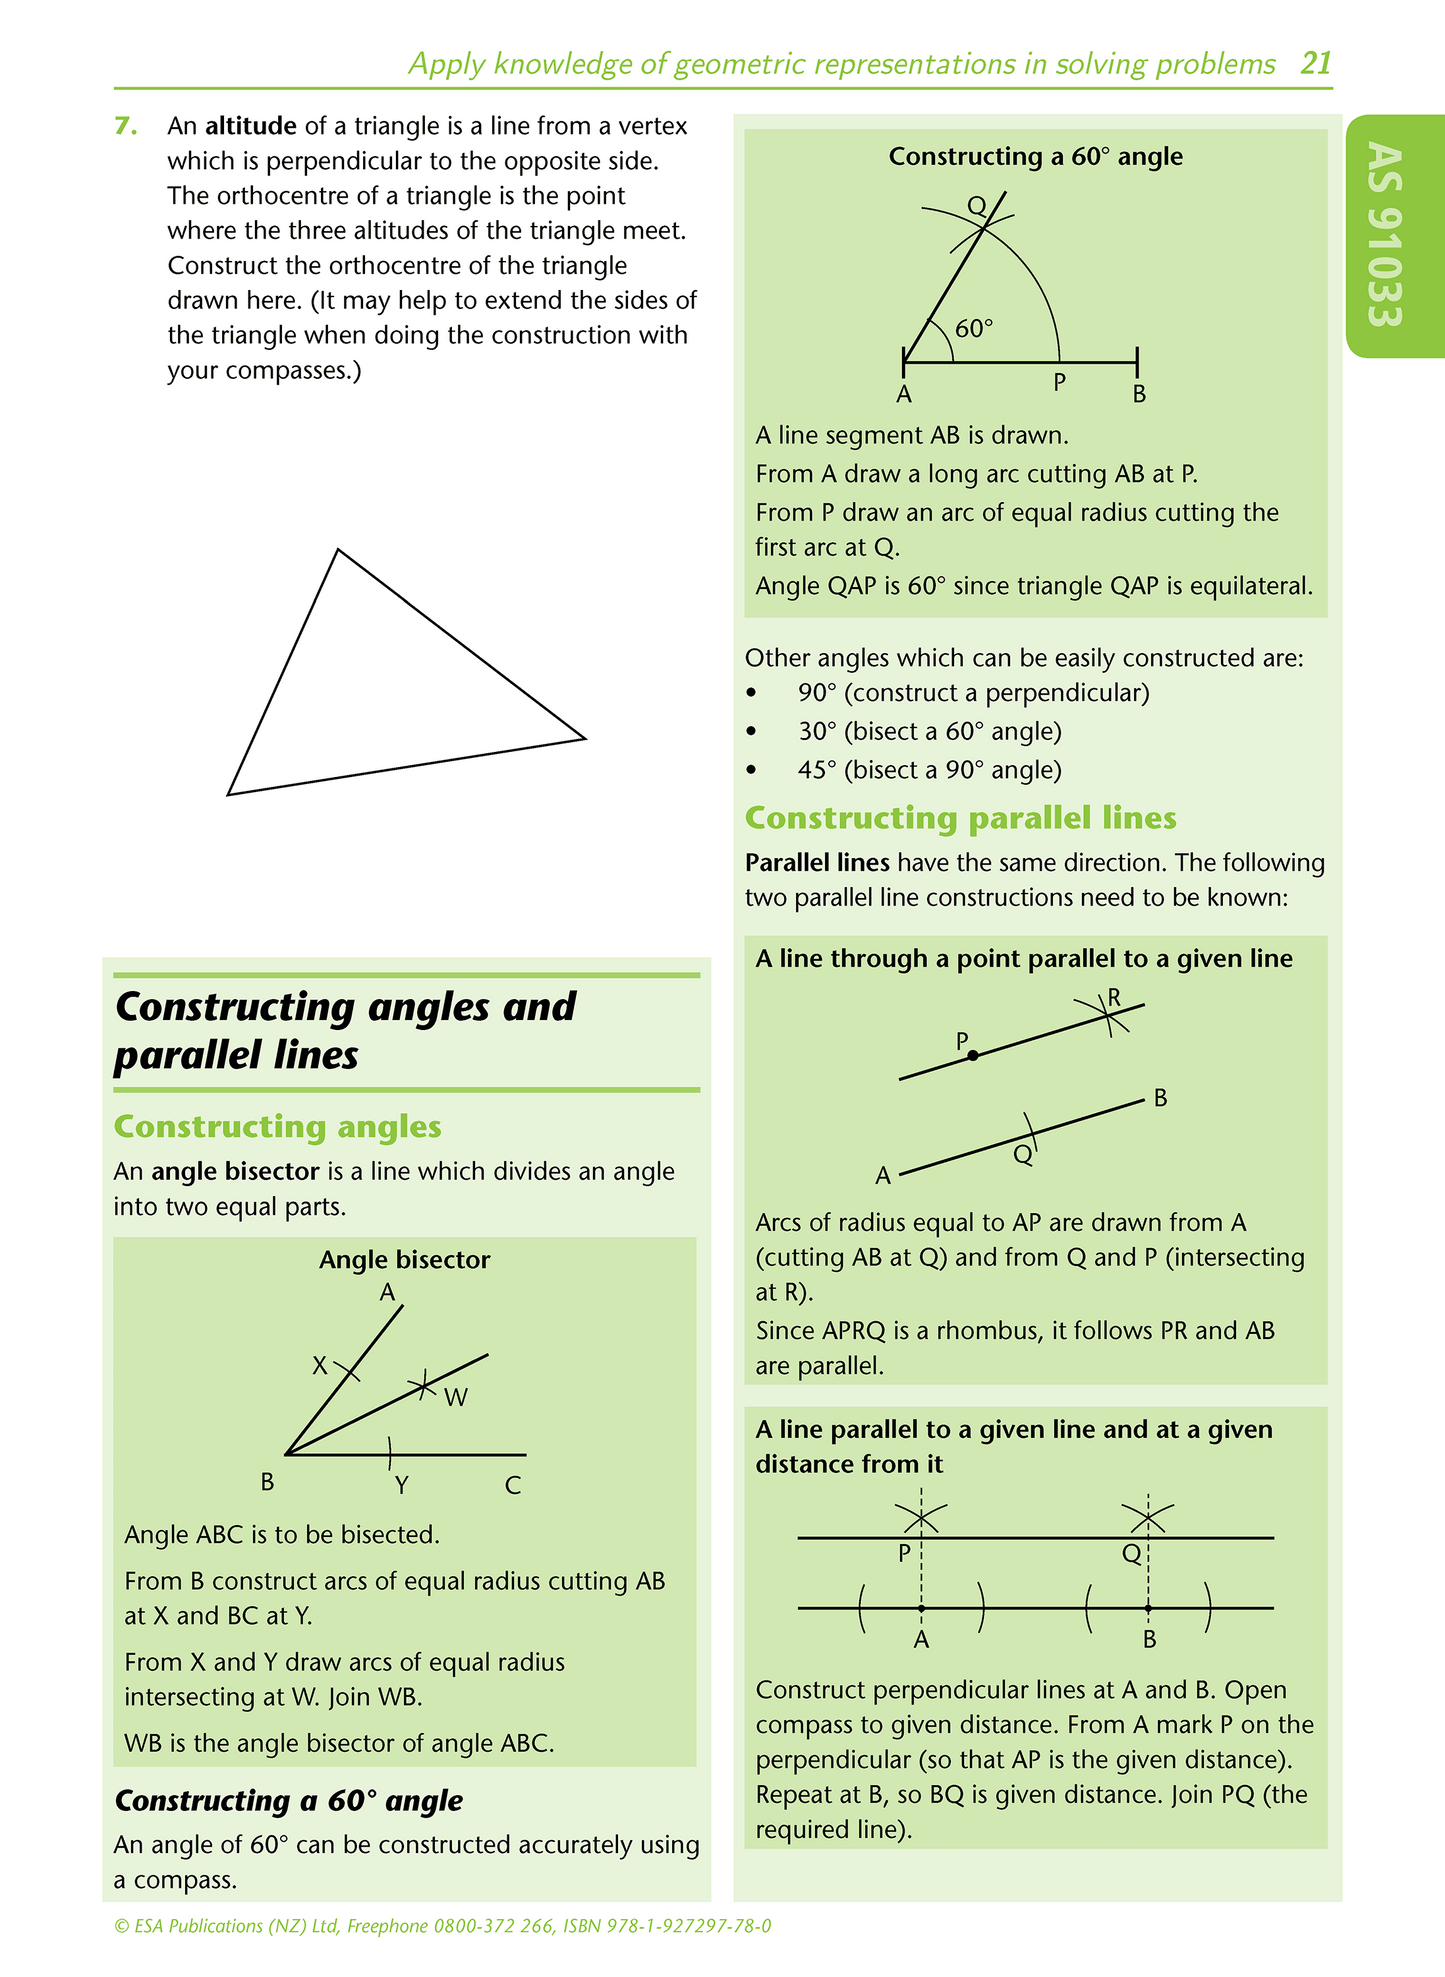 Level 1 Geometric Representations 1.8 Learning Workbook